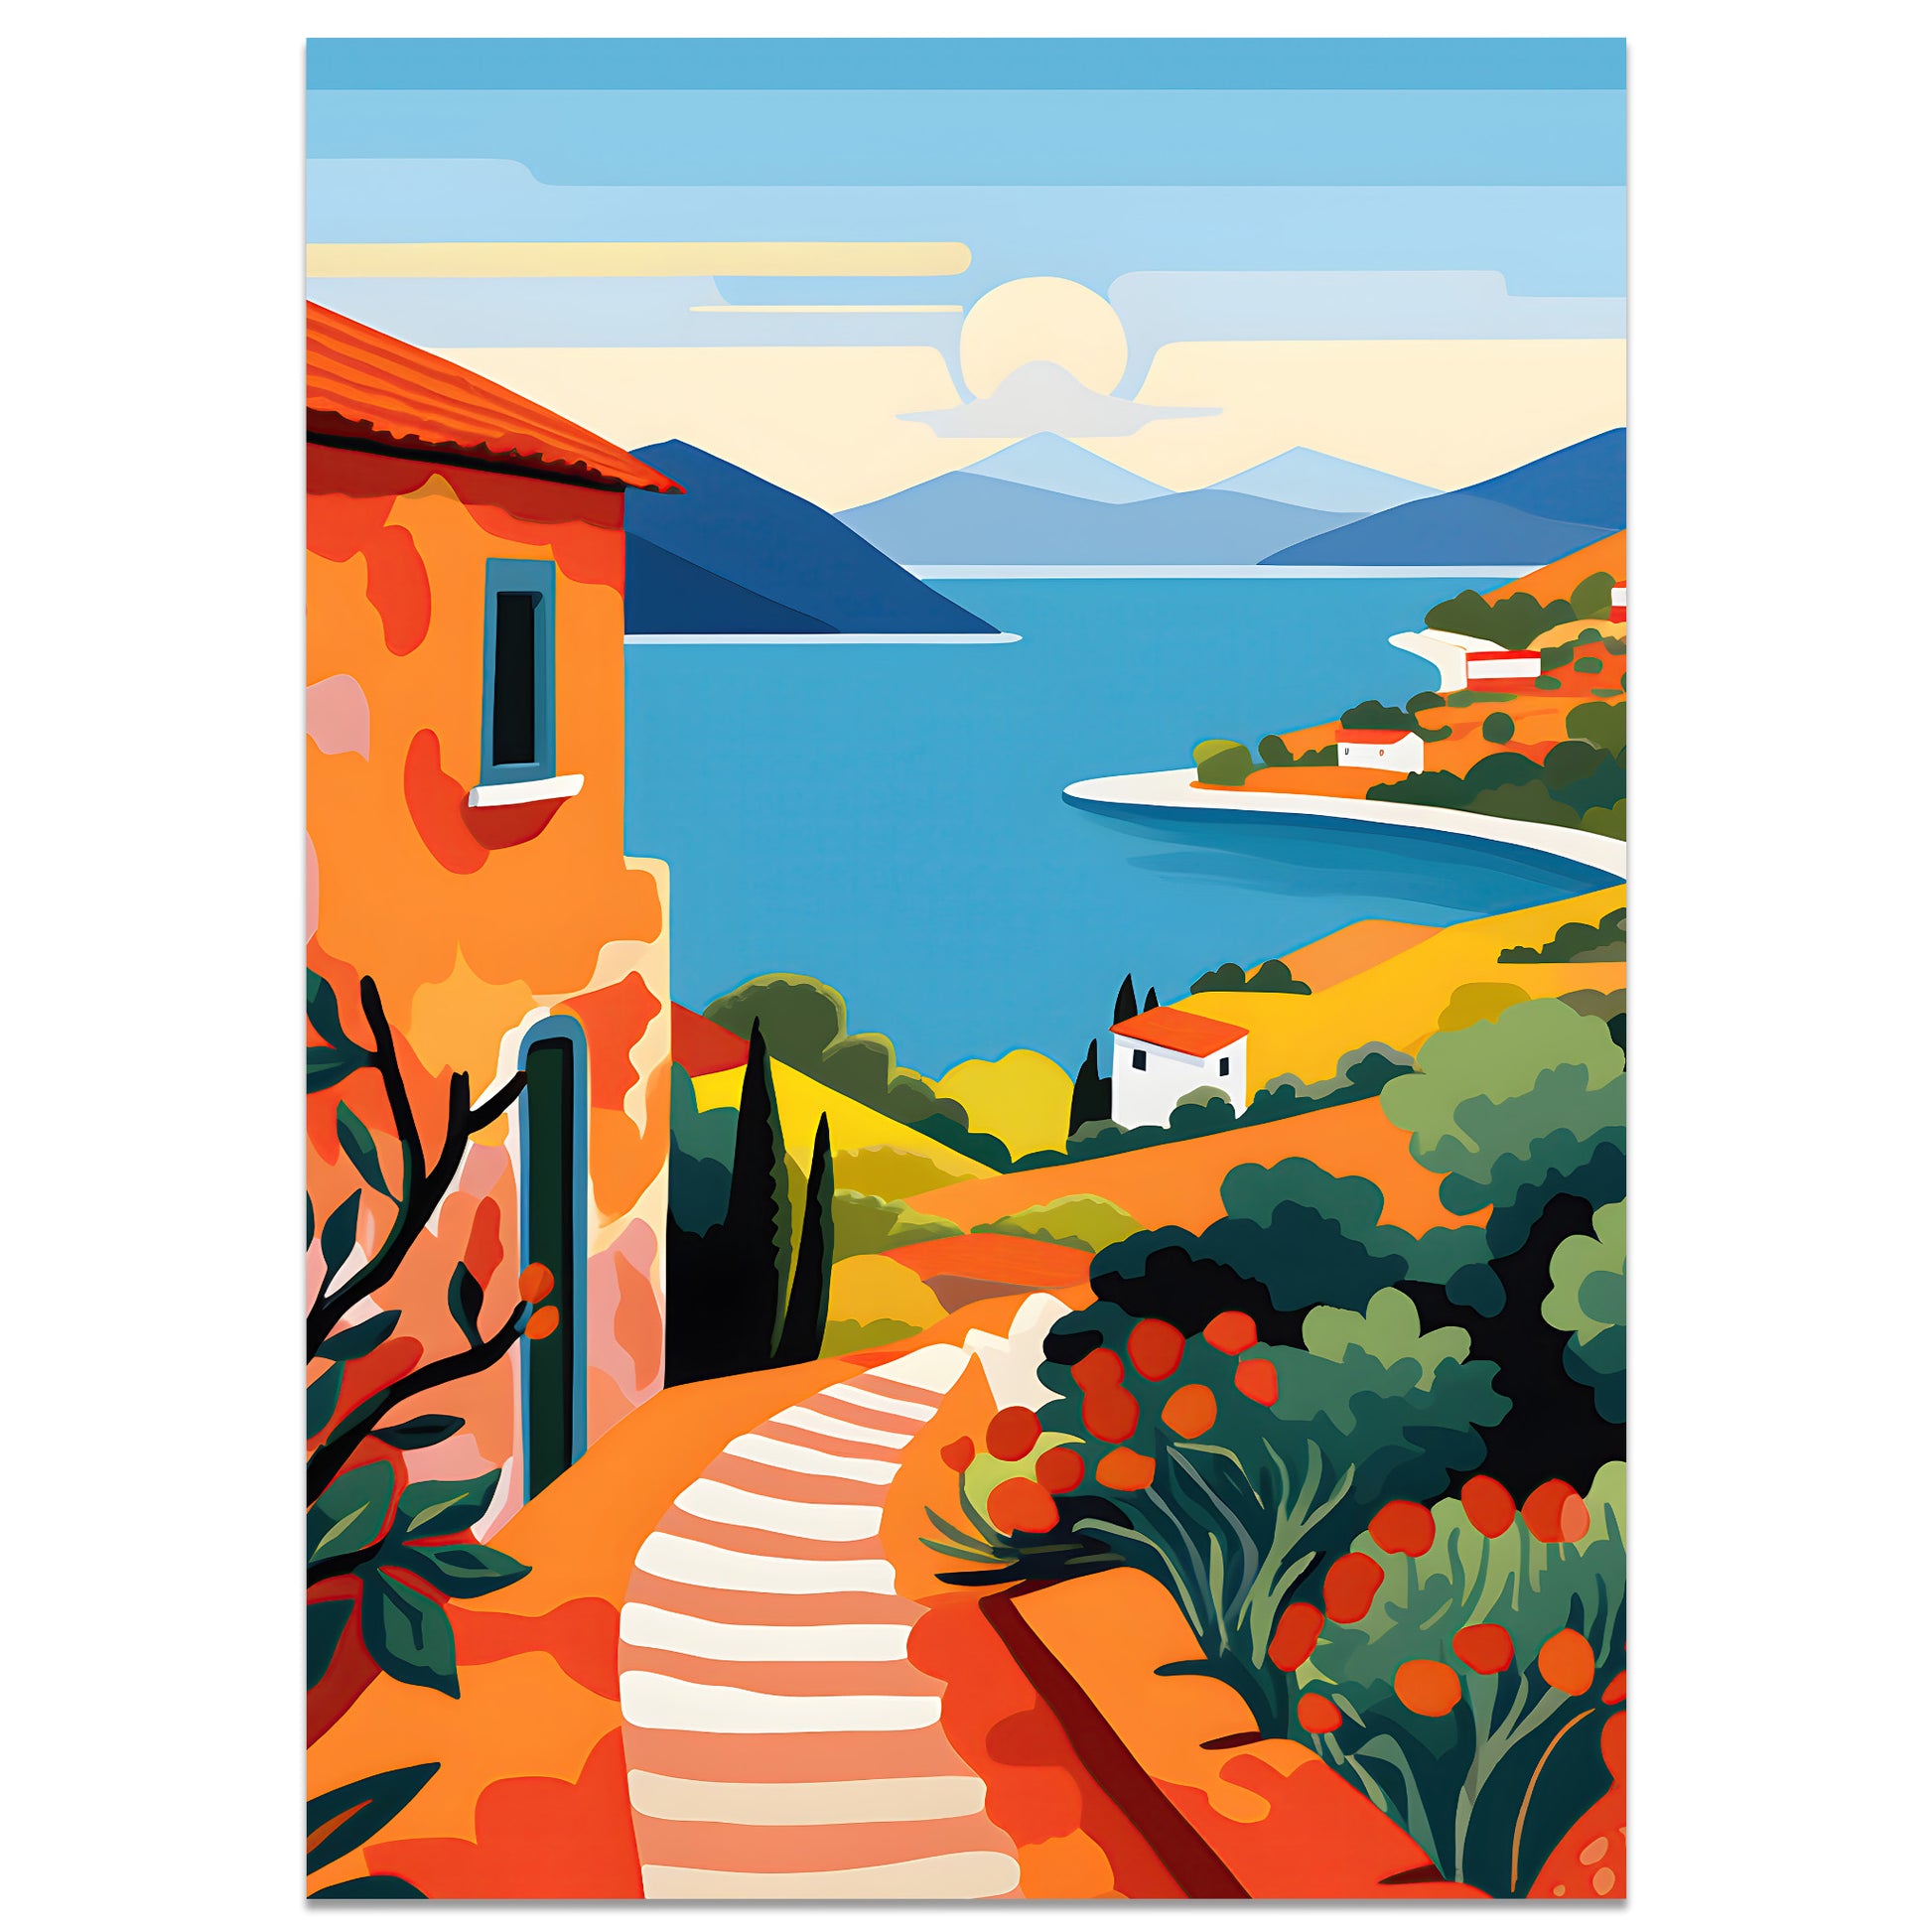 Art print of a mediterranean coastal village landscape illustration